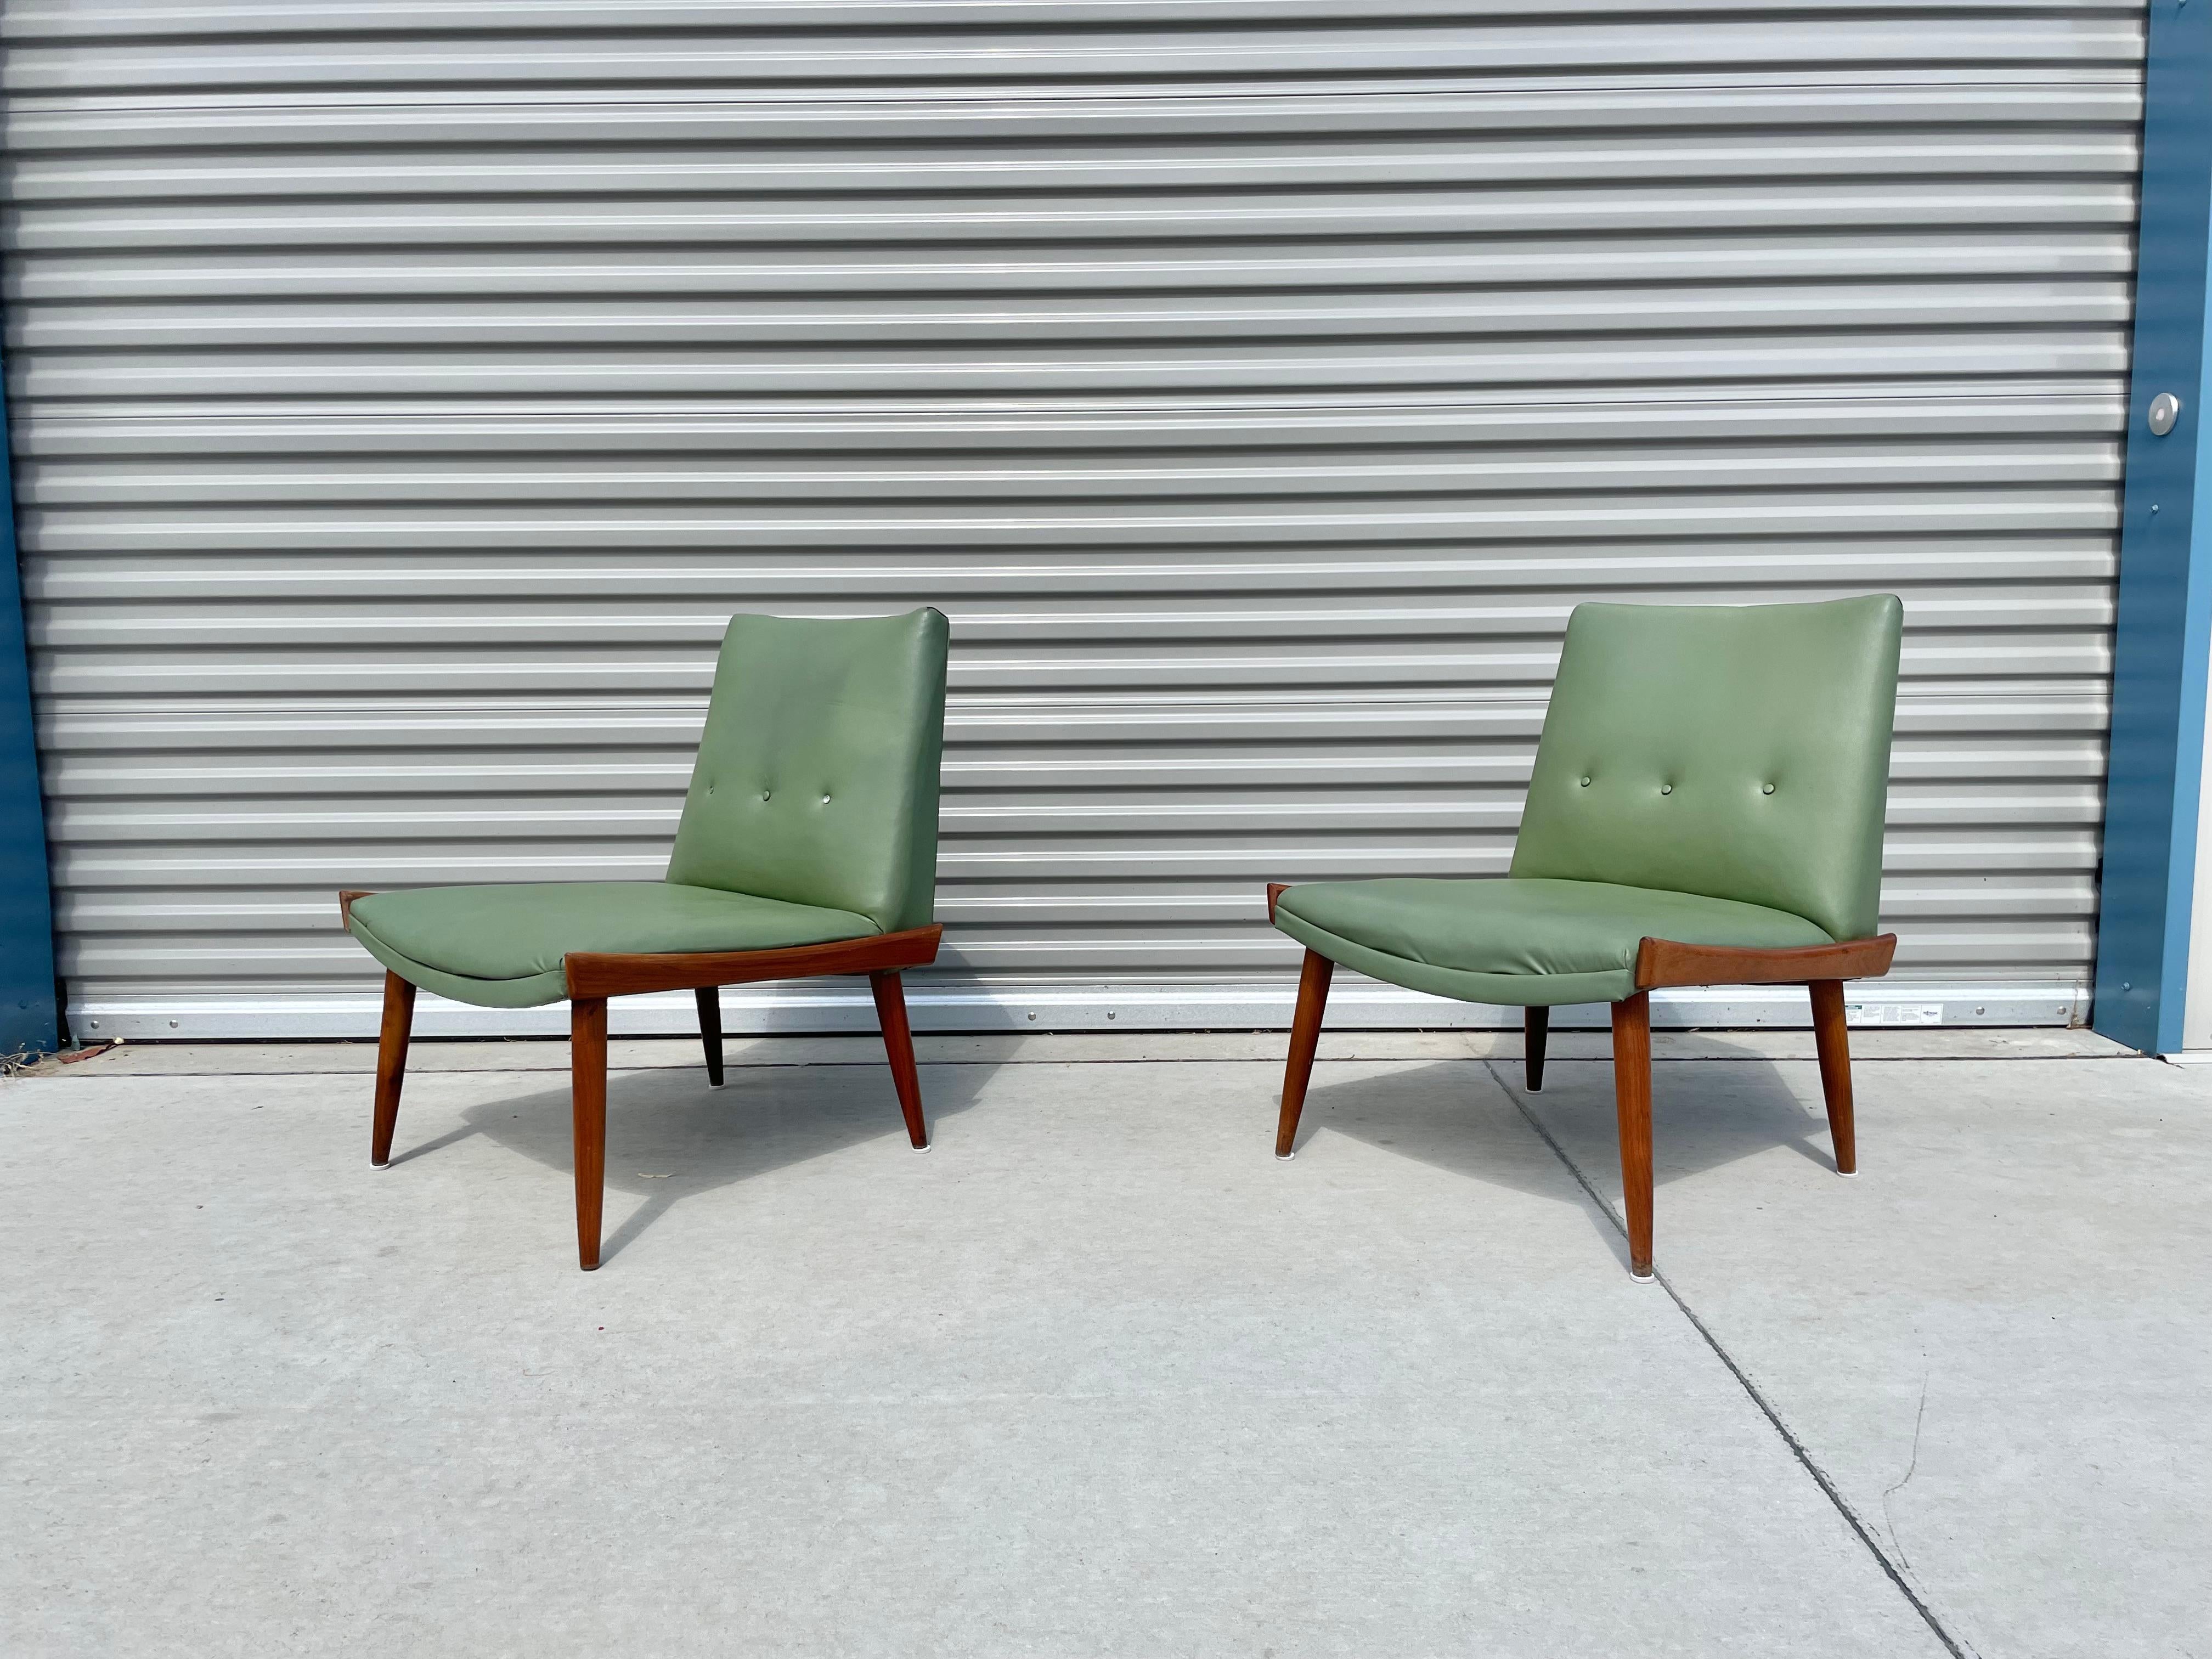 Mid-Century Modern Midcentury Slipper Chairs by Kroehler Mfg Co.